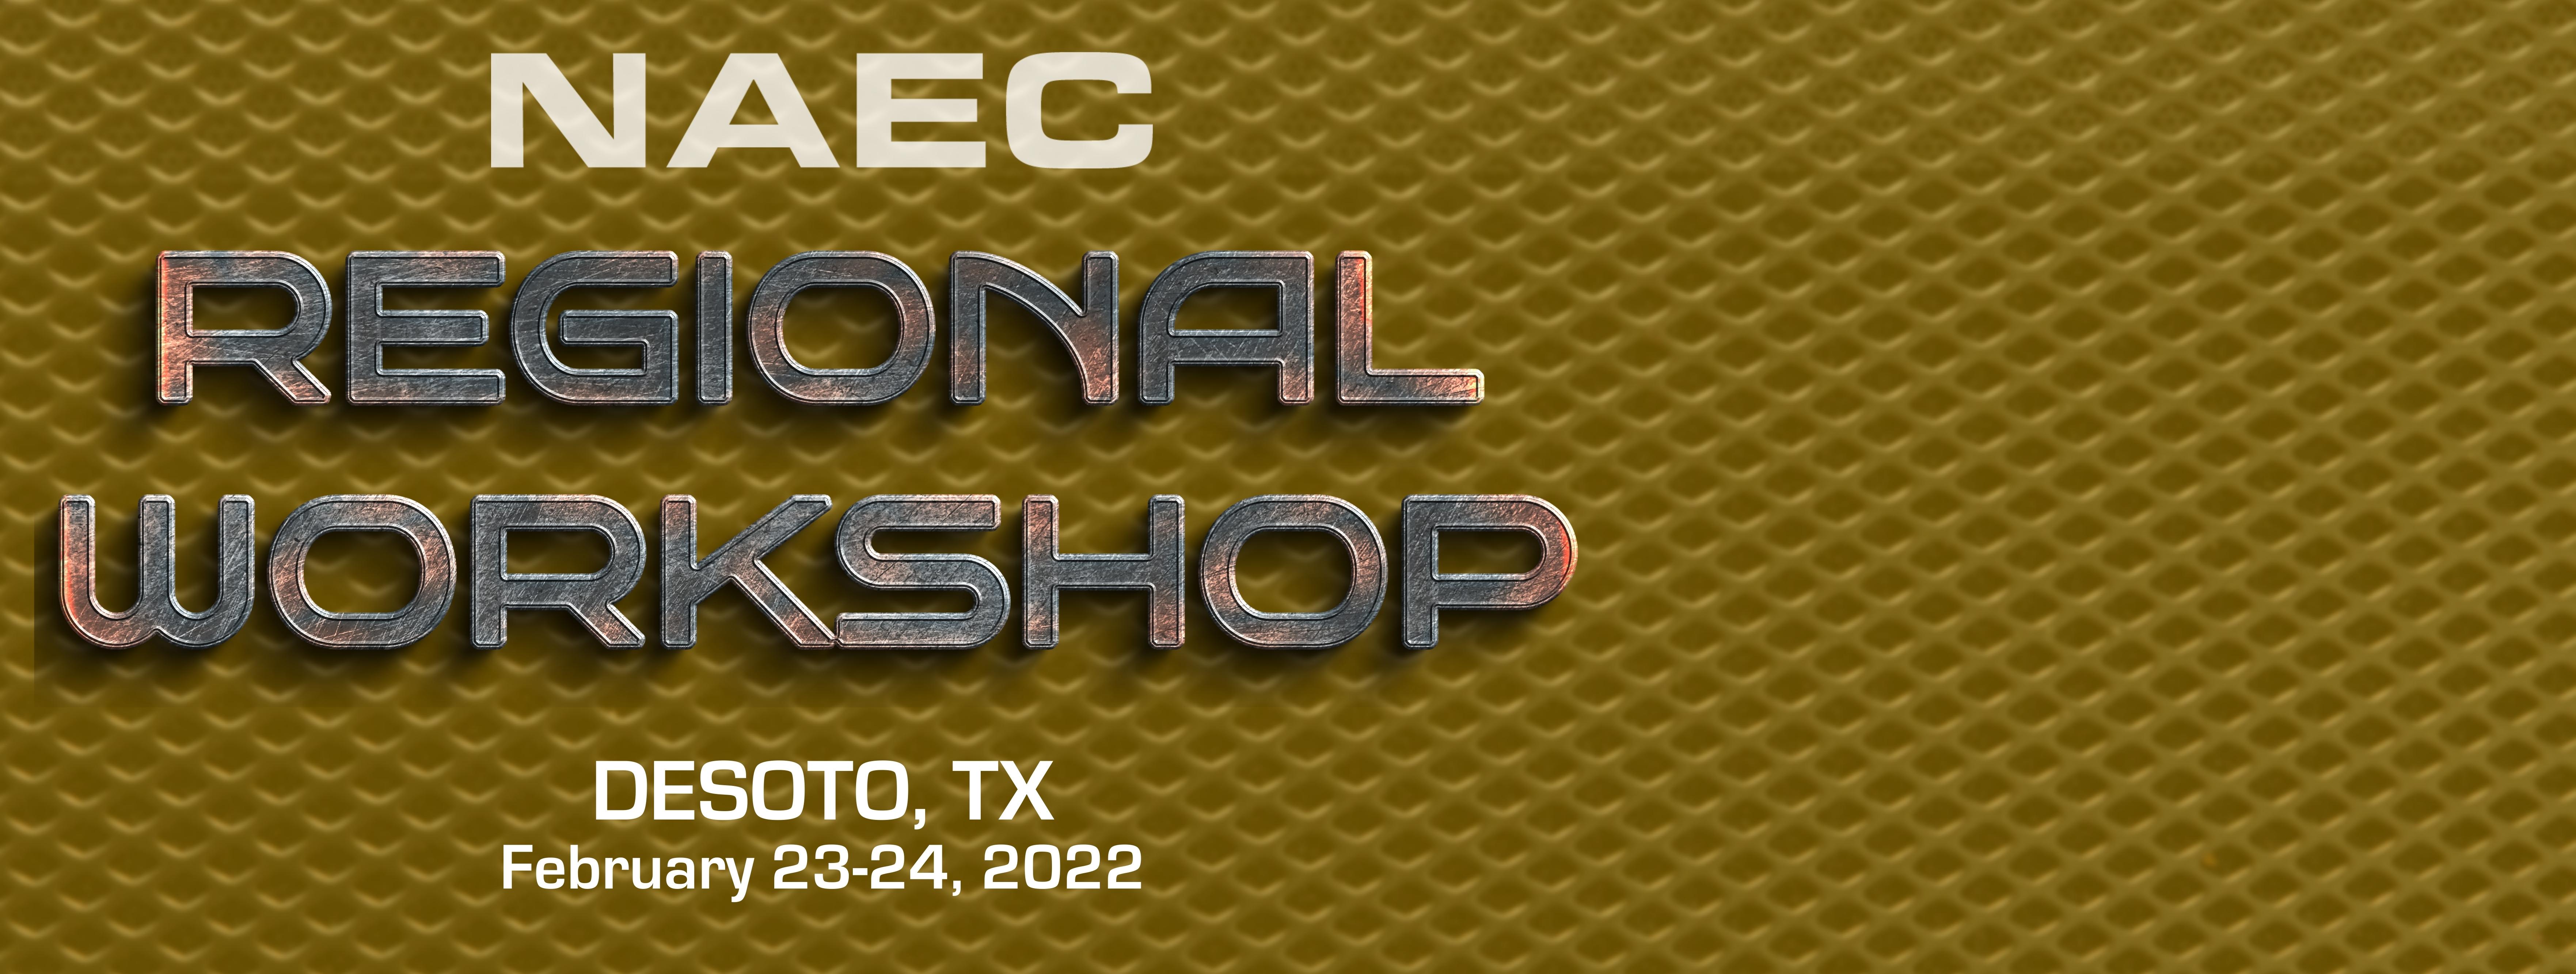 Texas regional workshop